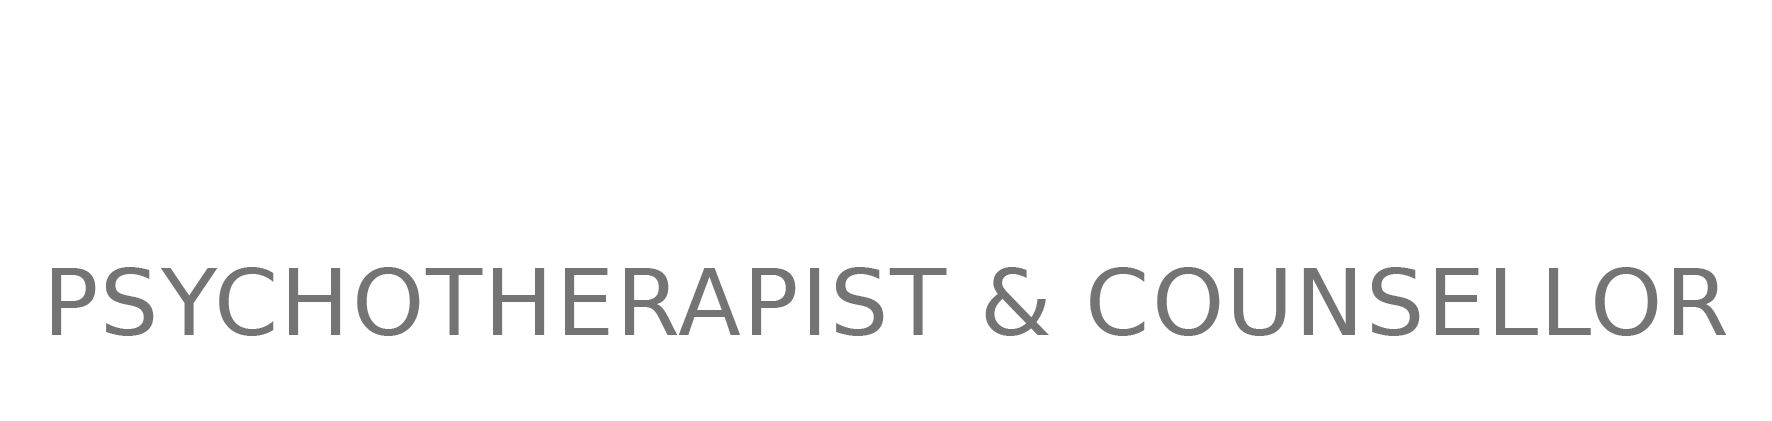 Kieran McCrystal Logo